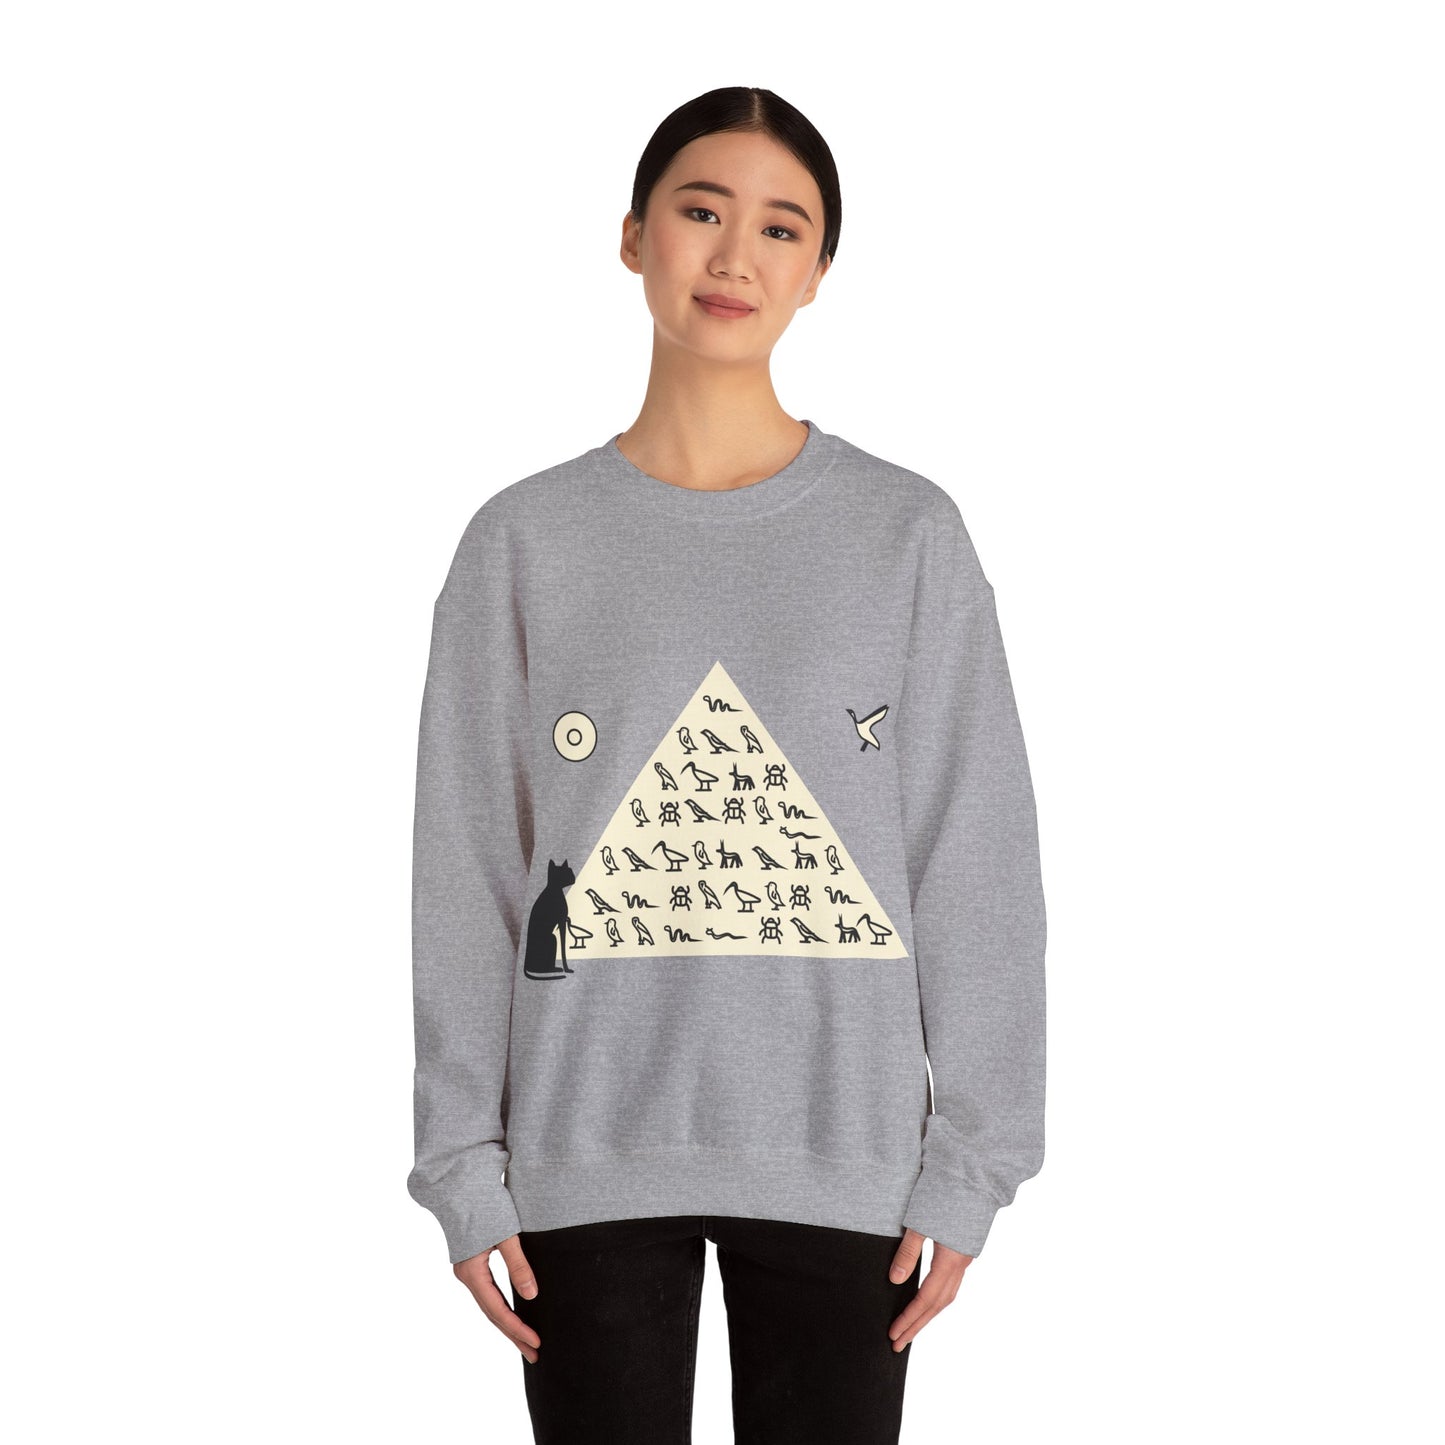 Sweatshirt adulte mixte Pyramide